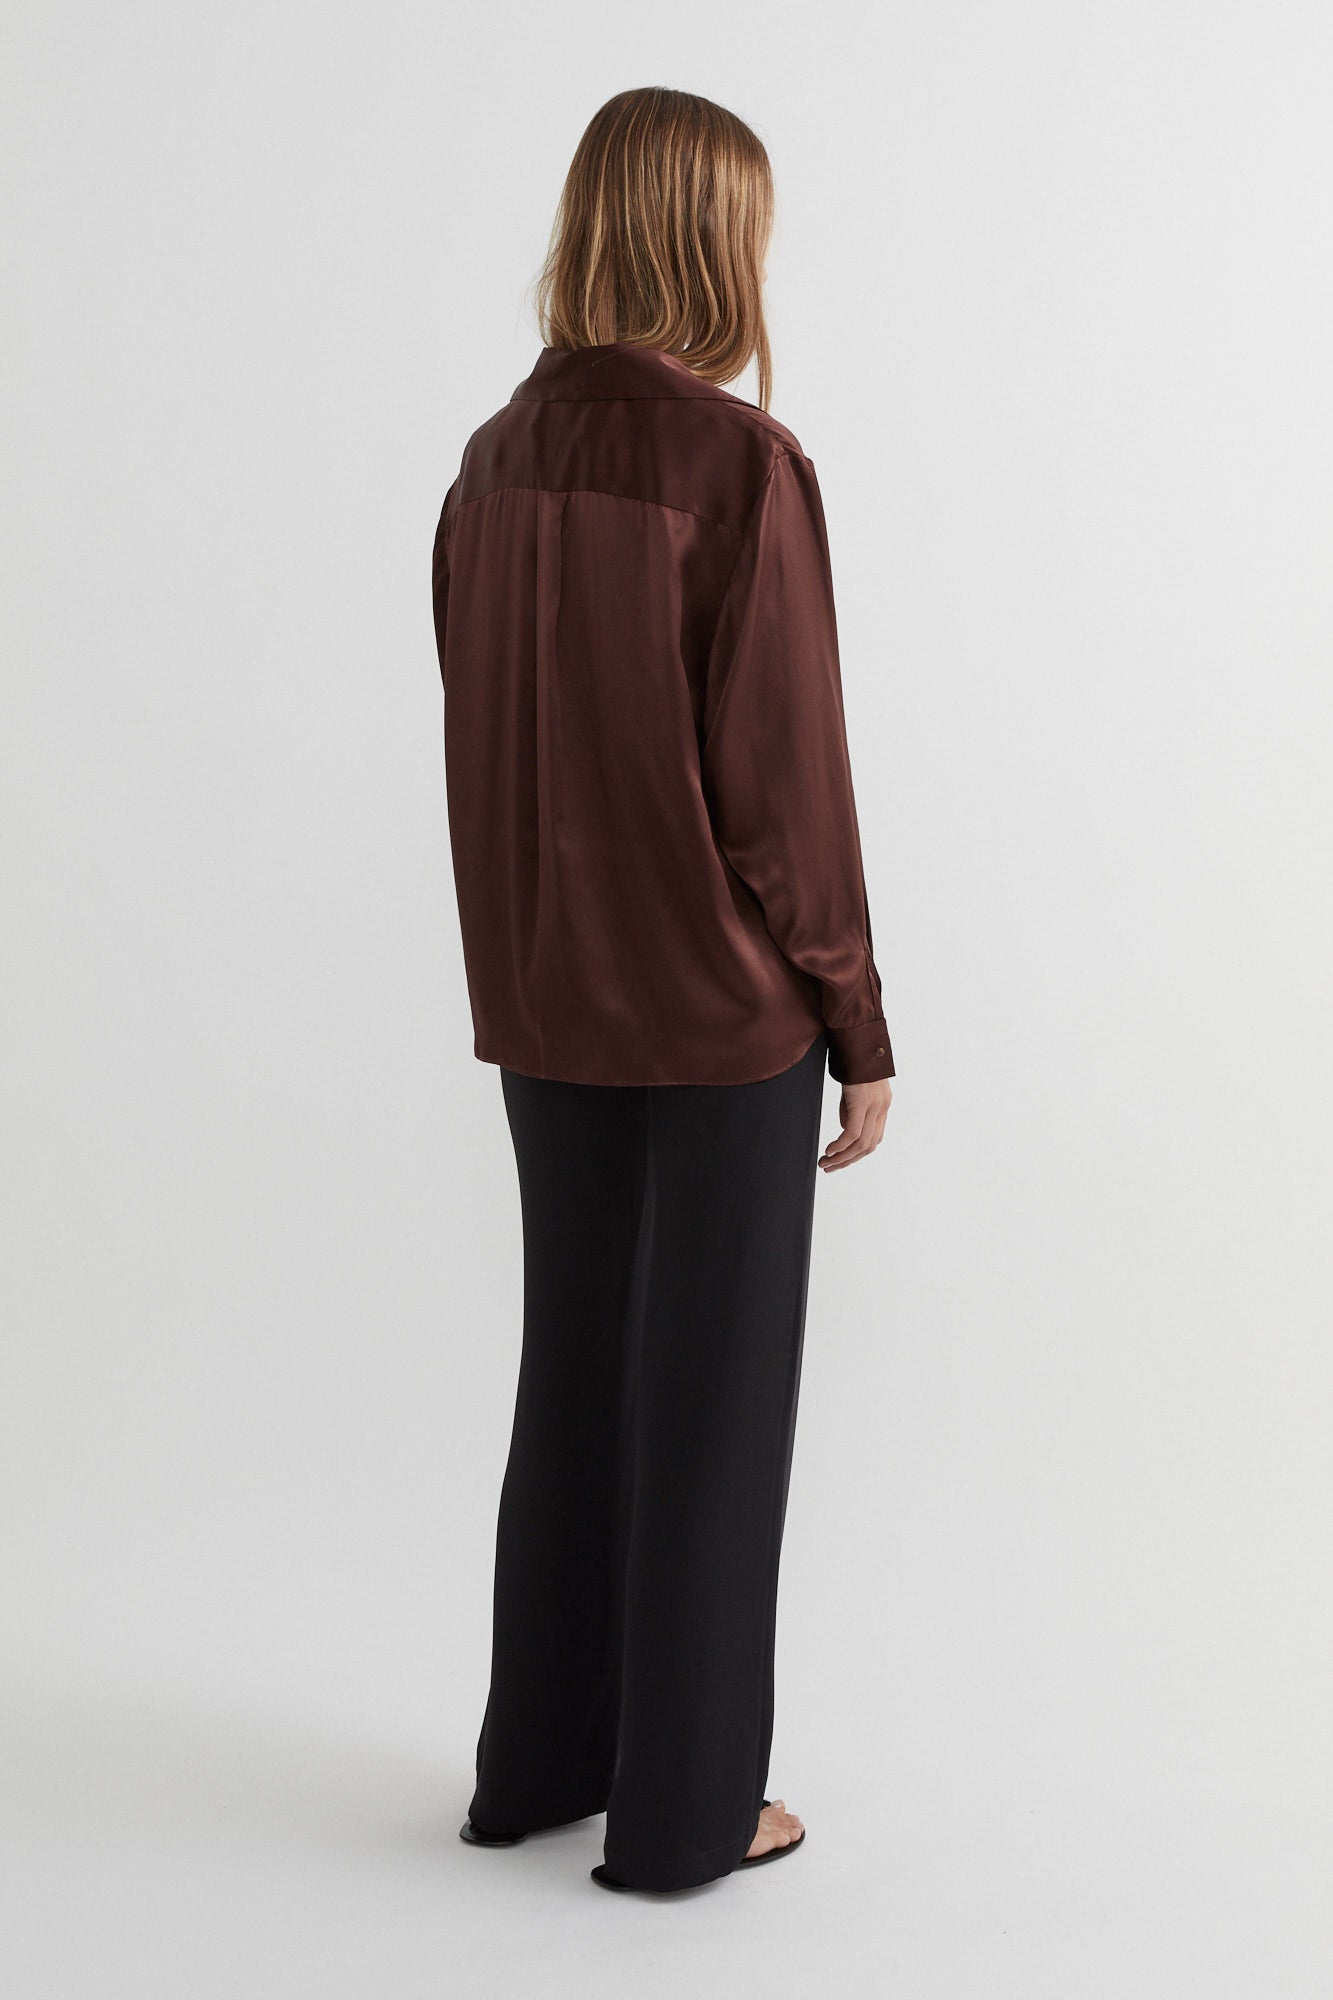 SAINT Lookbook Classic Silk Shirt chocolate brown, long sleeve button up. Made in Australia